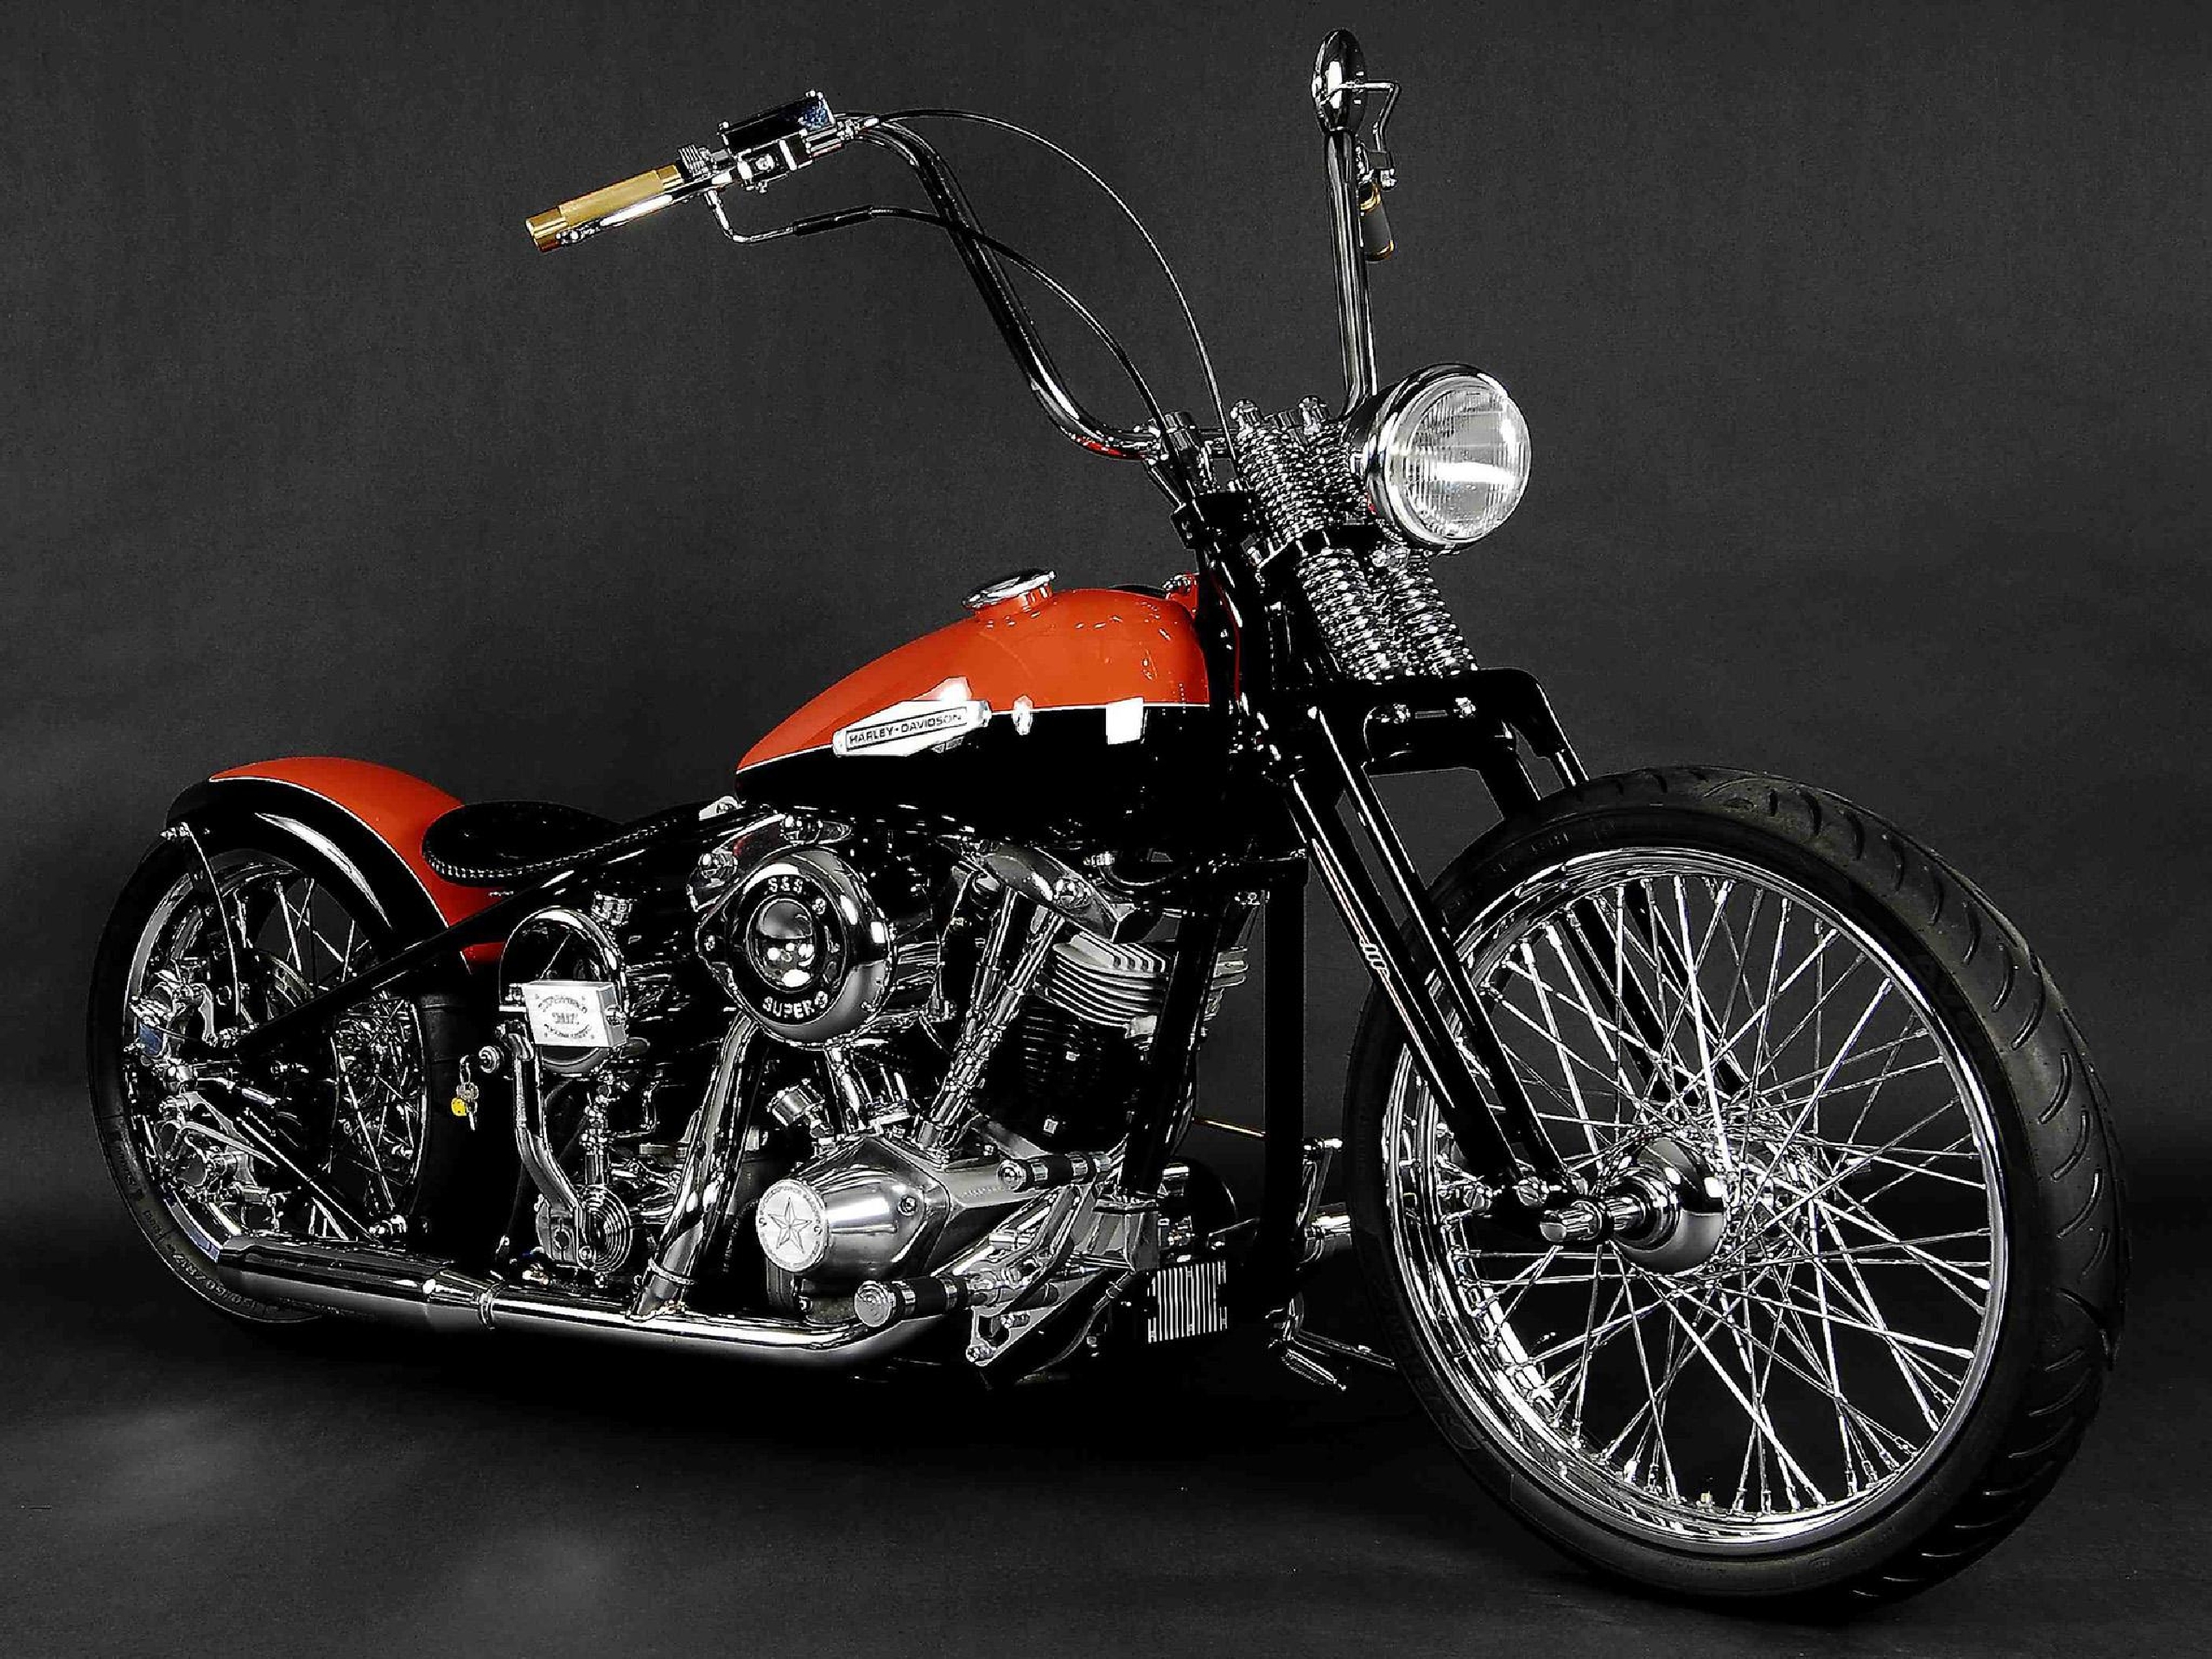 Harley Davidson Free Wallpaper - Nekeran.com